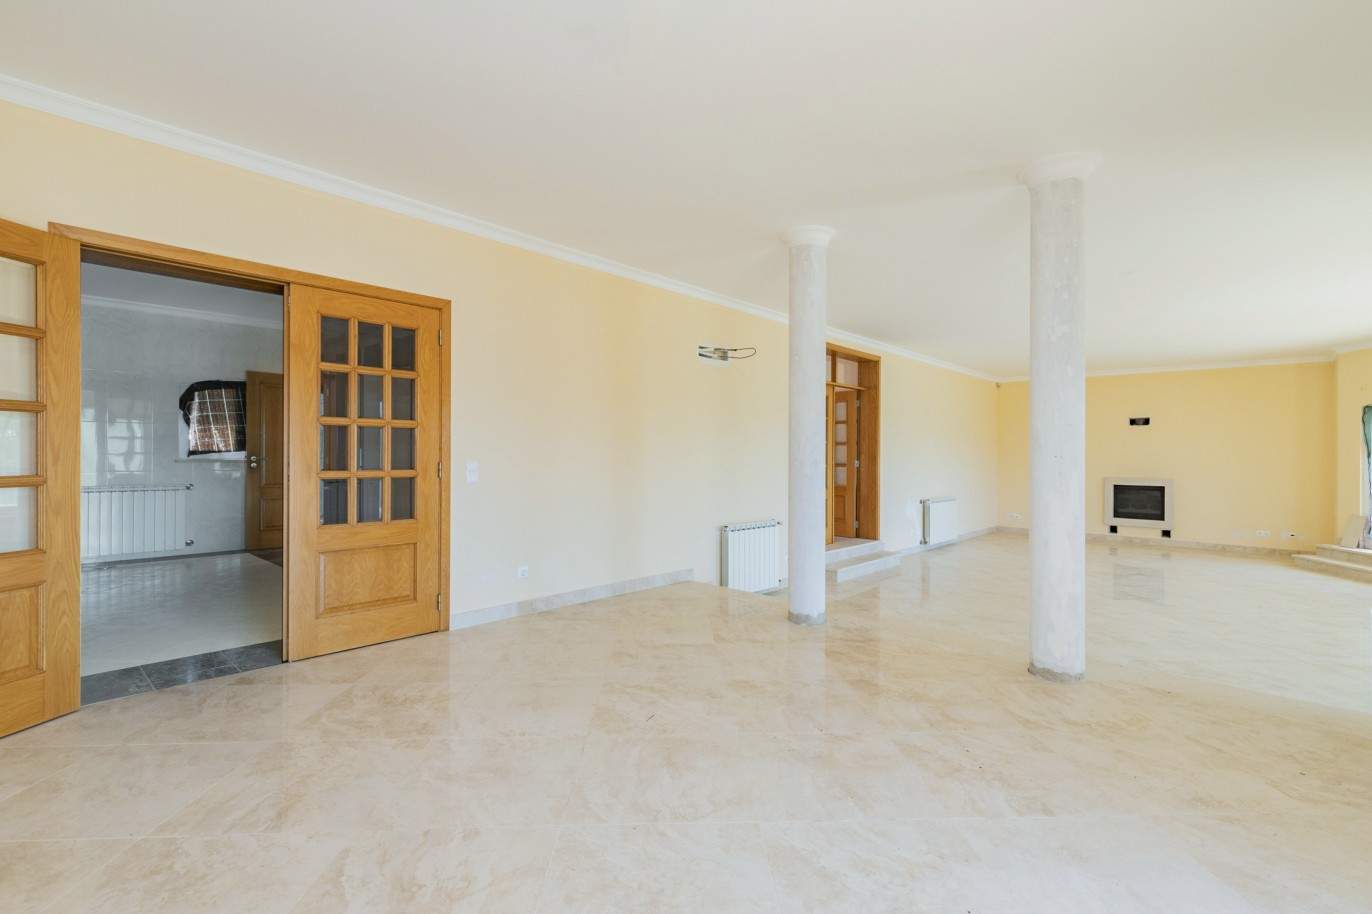 4 Bedroom Villa à vendre à Monte Judeu, Portimão, Algarve_207294